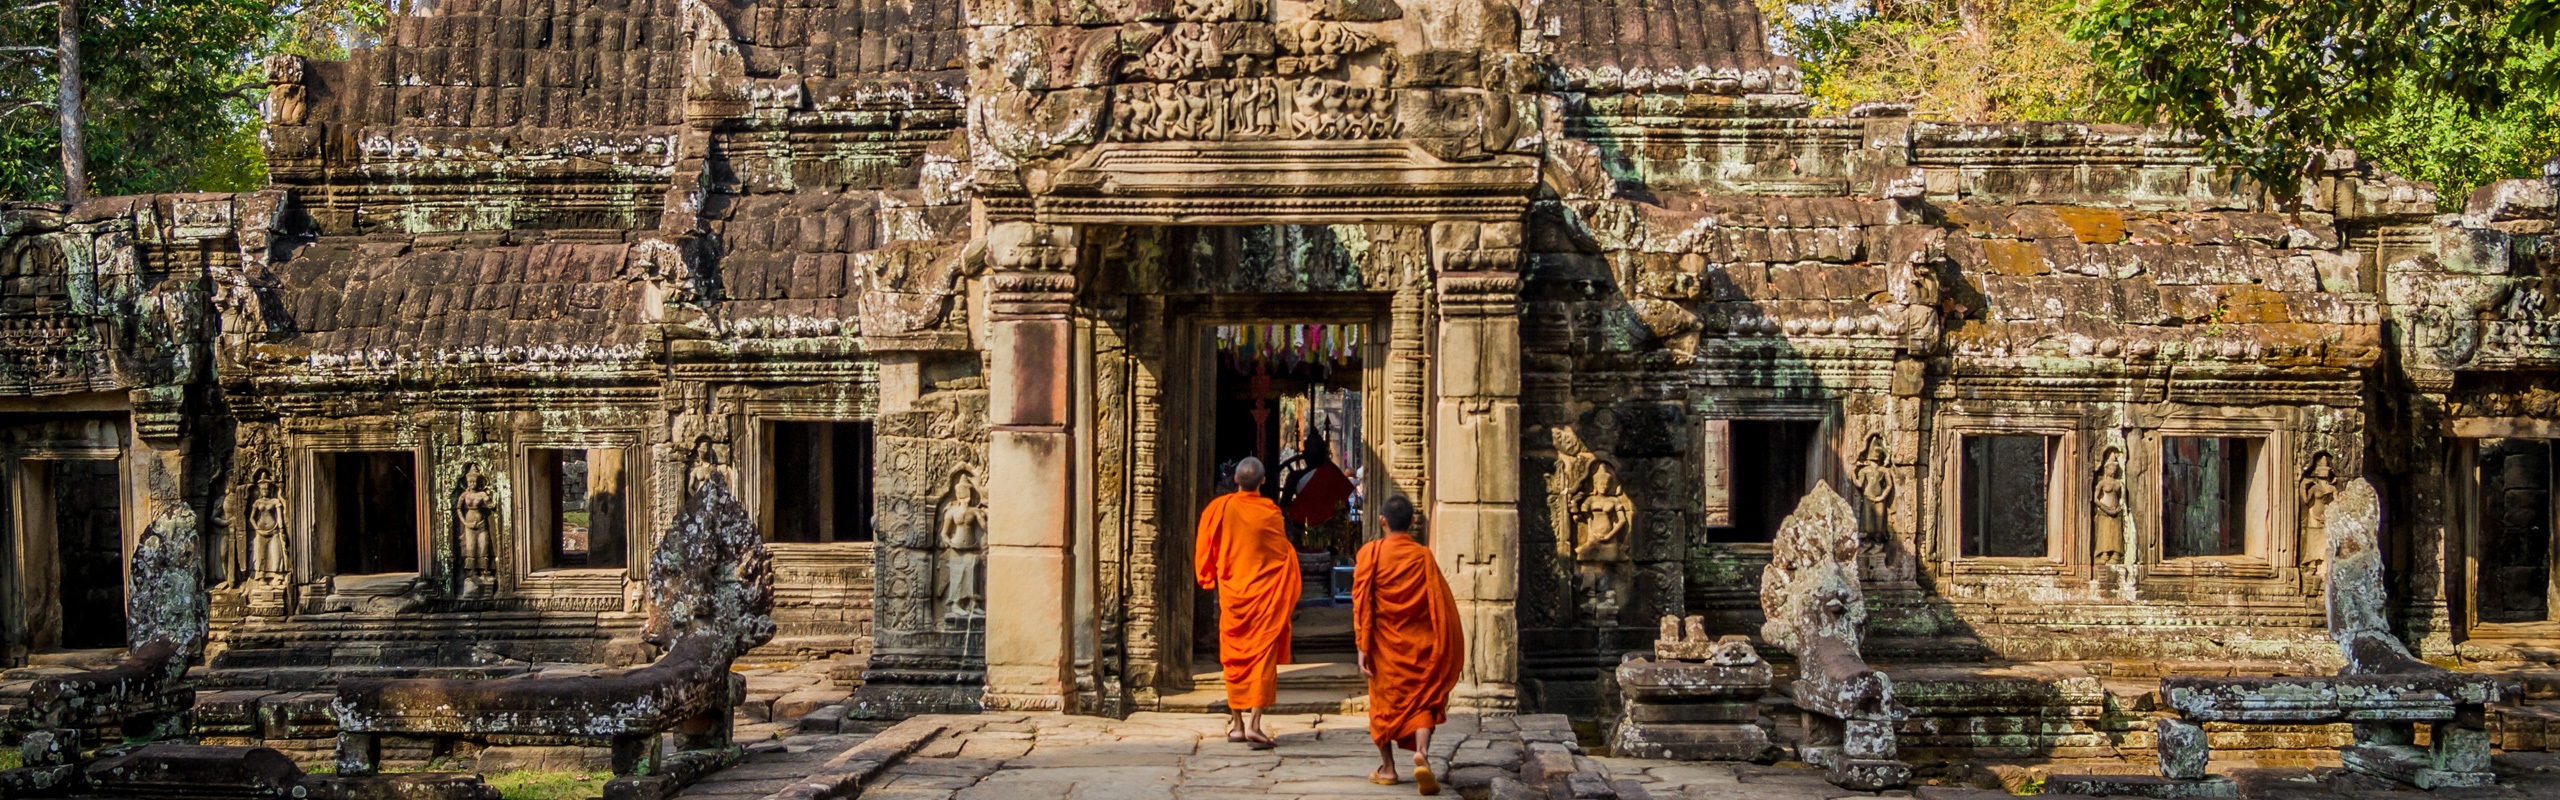 Cambodia Travel Reviews